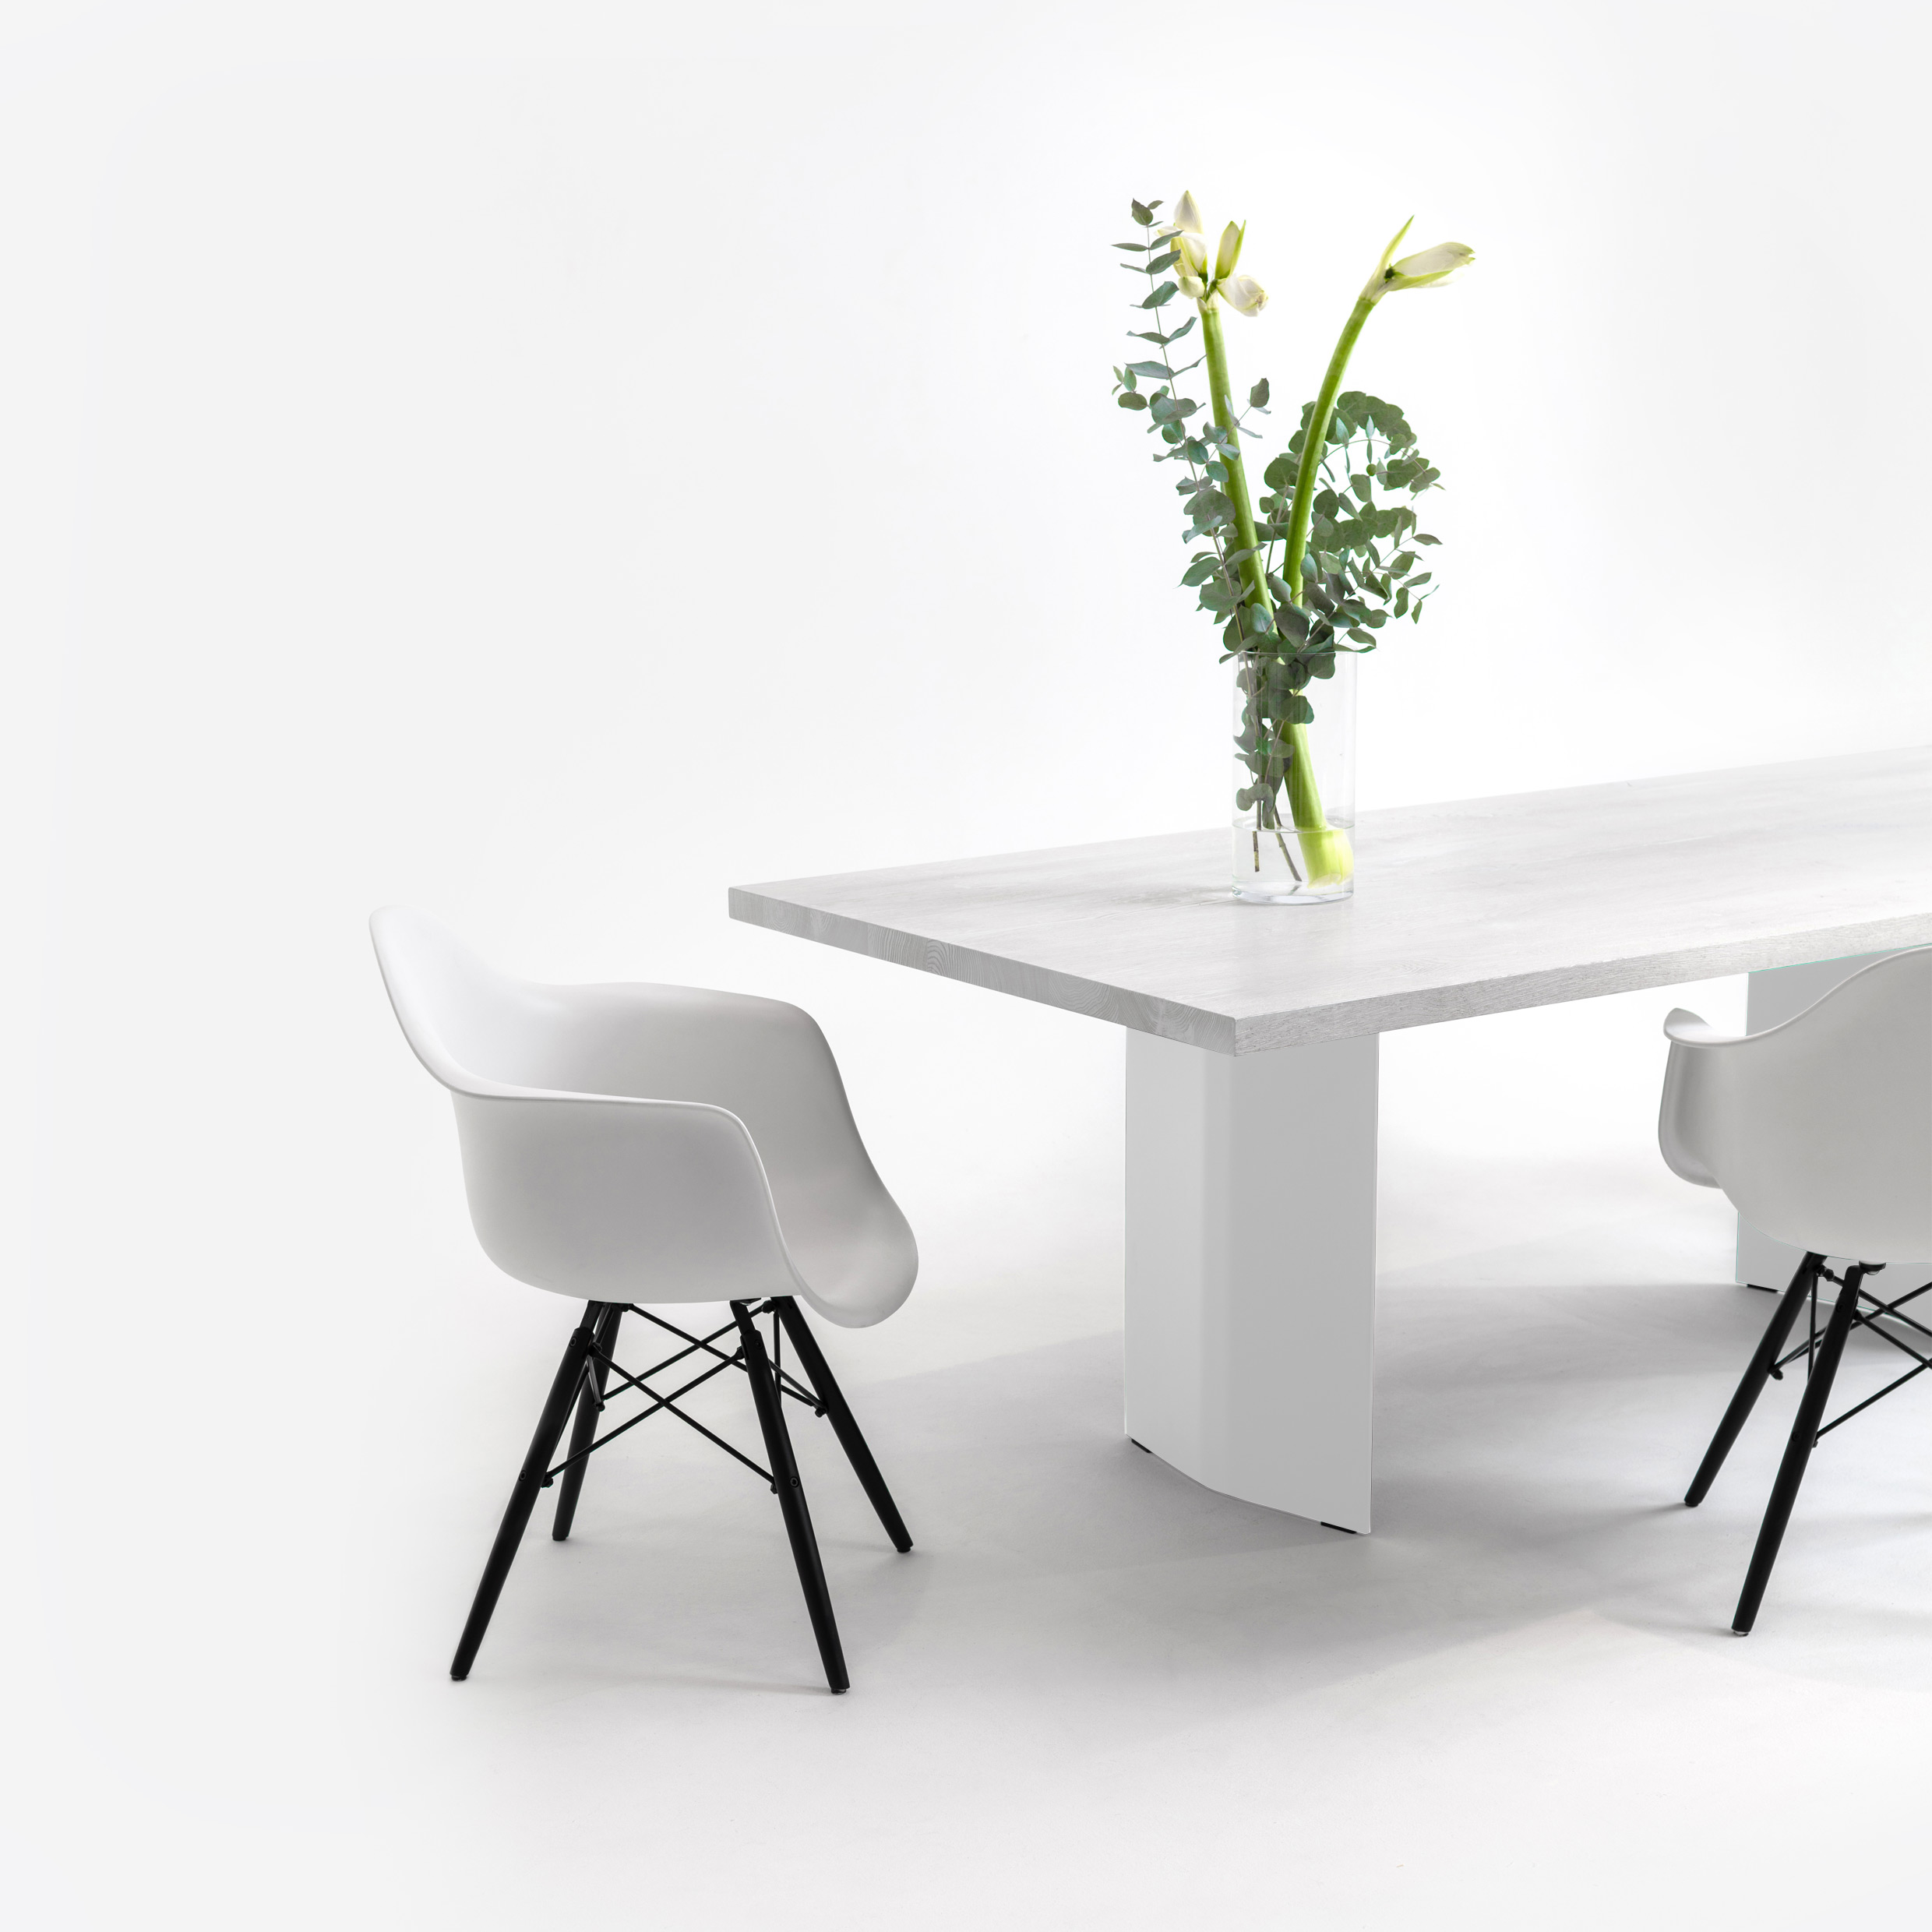 FORM EXCLUSIVE // FYNN - DINING TABLE | GERMAN OAK | WHITE OILED - 220CM X 100CM X 4CM - SINGLE WHITE